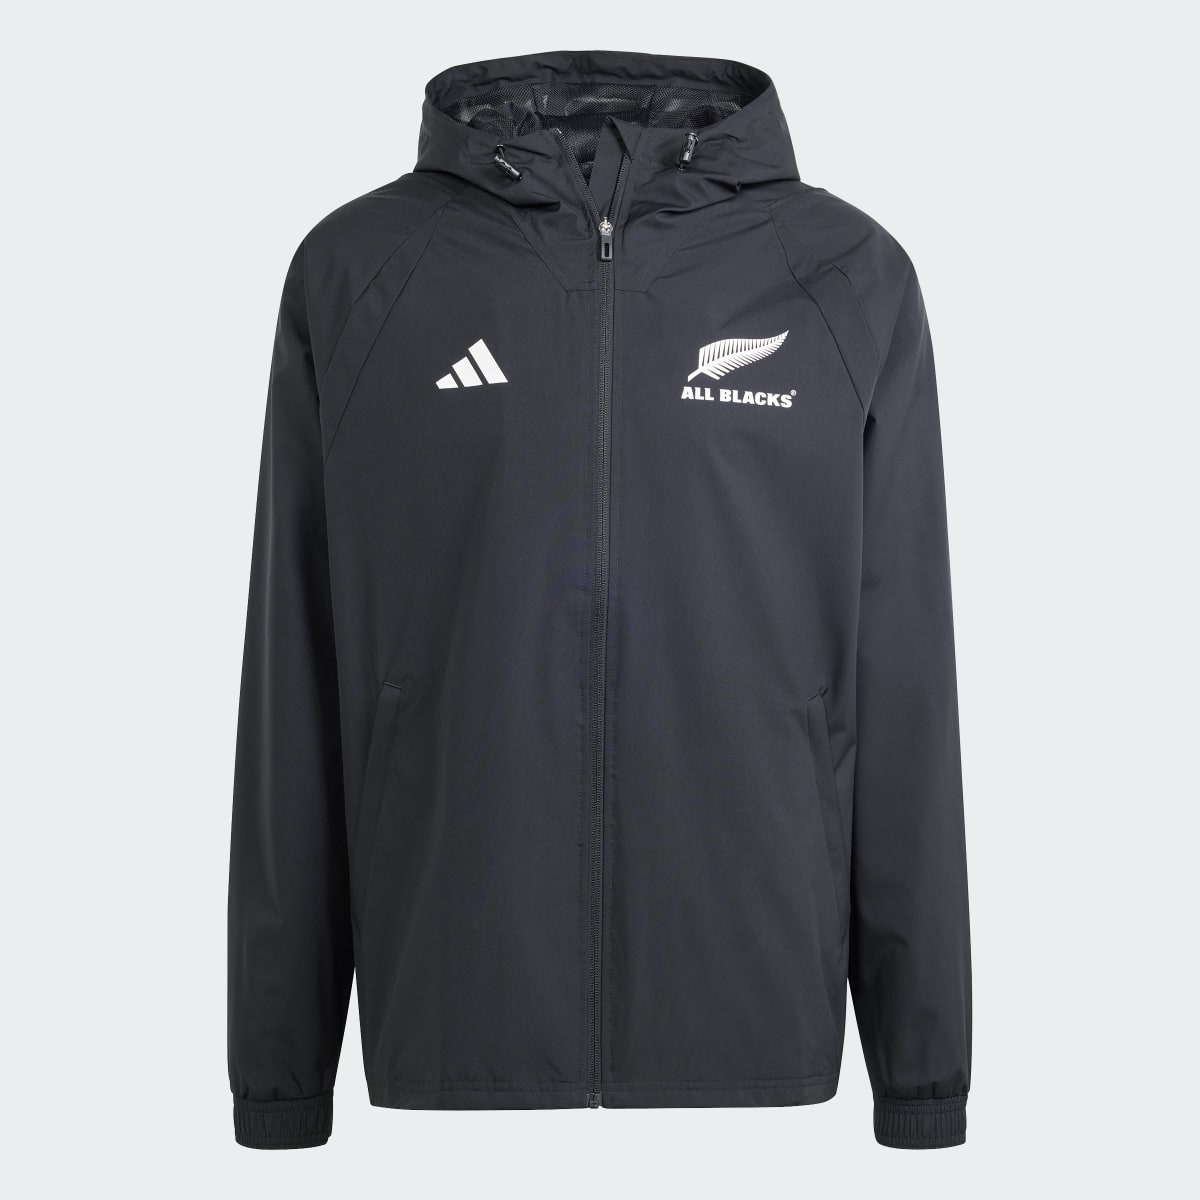 Adidas All Blacks Rugby Wind Jacket. 5